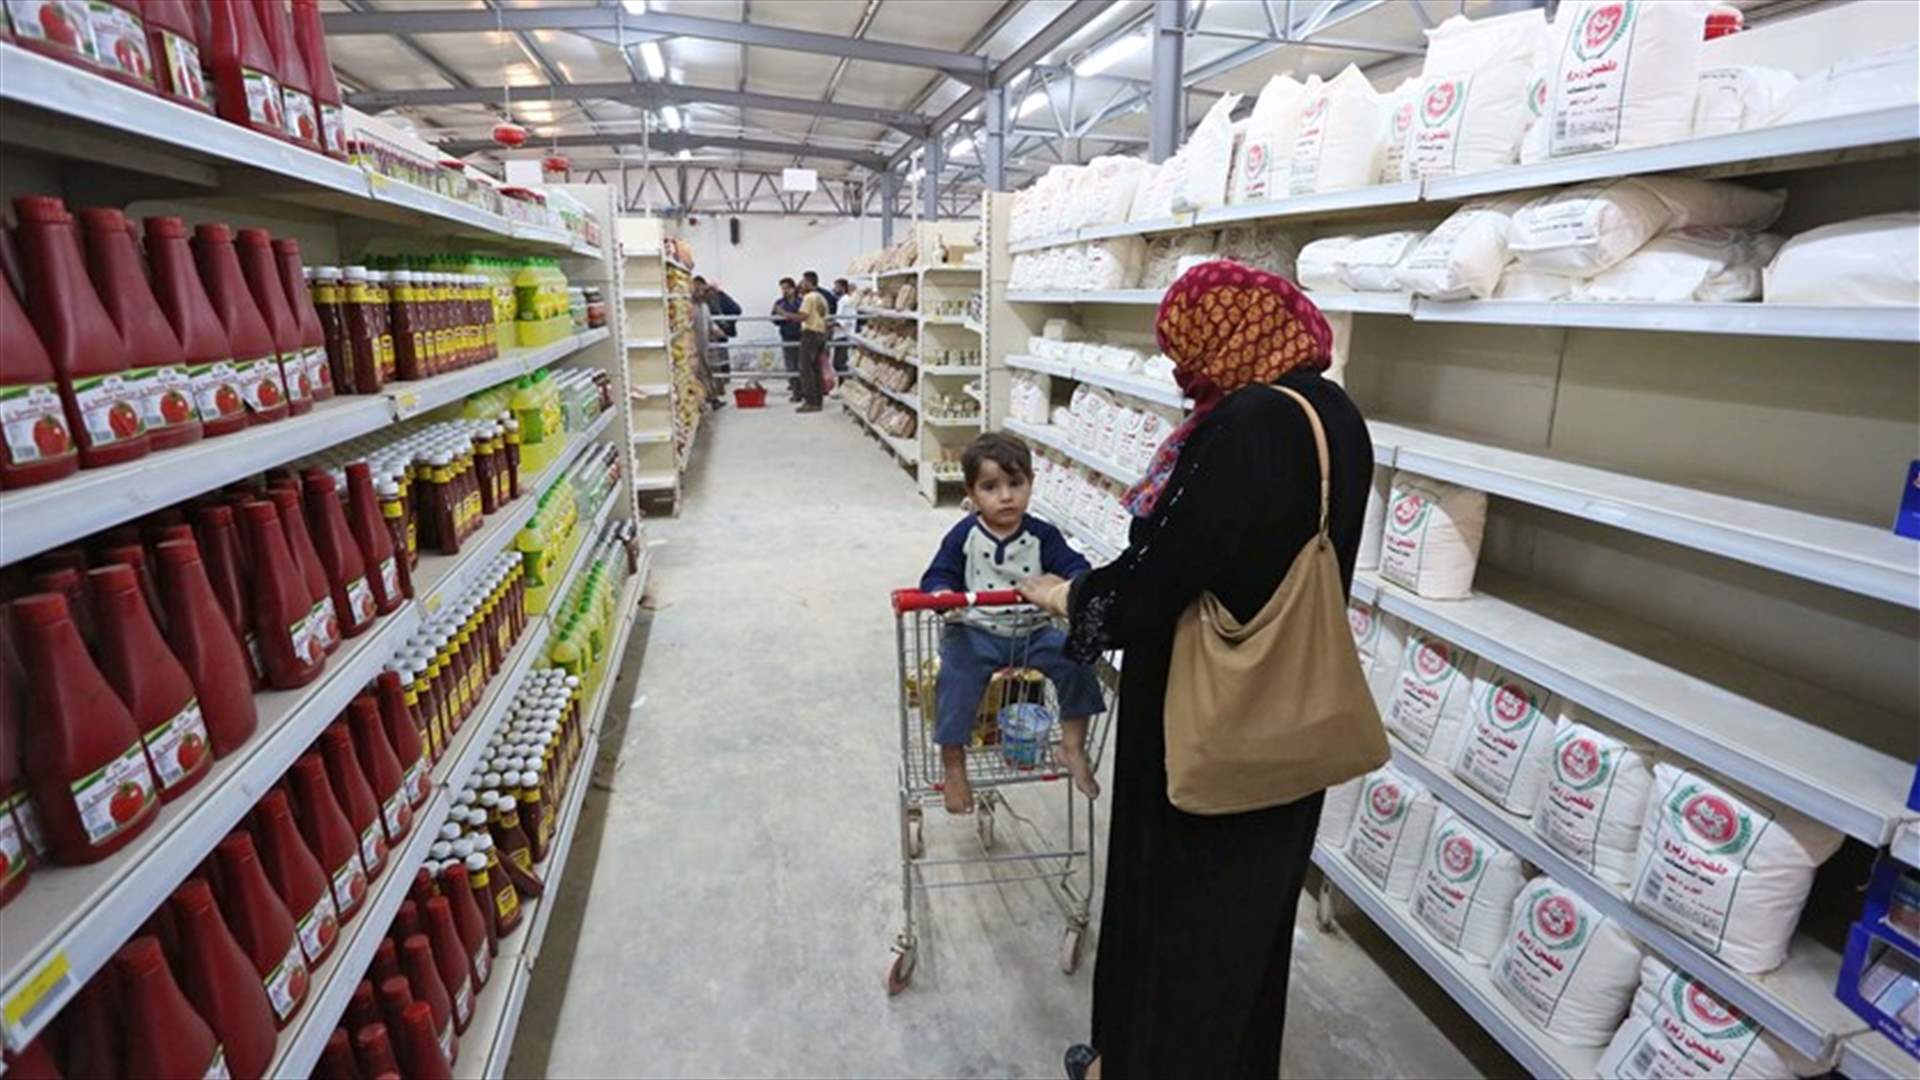 At Zaatari camp supermarket, Syrian refugees shop with blink of an eye